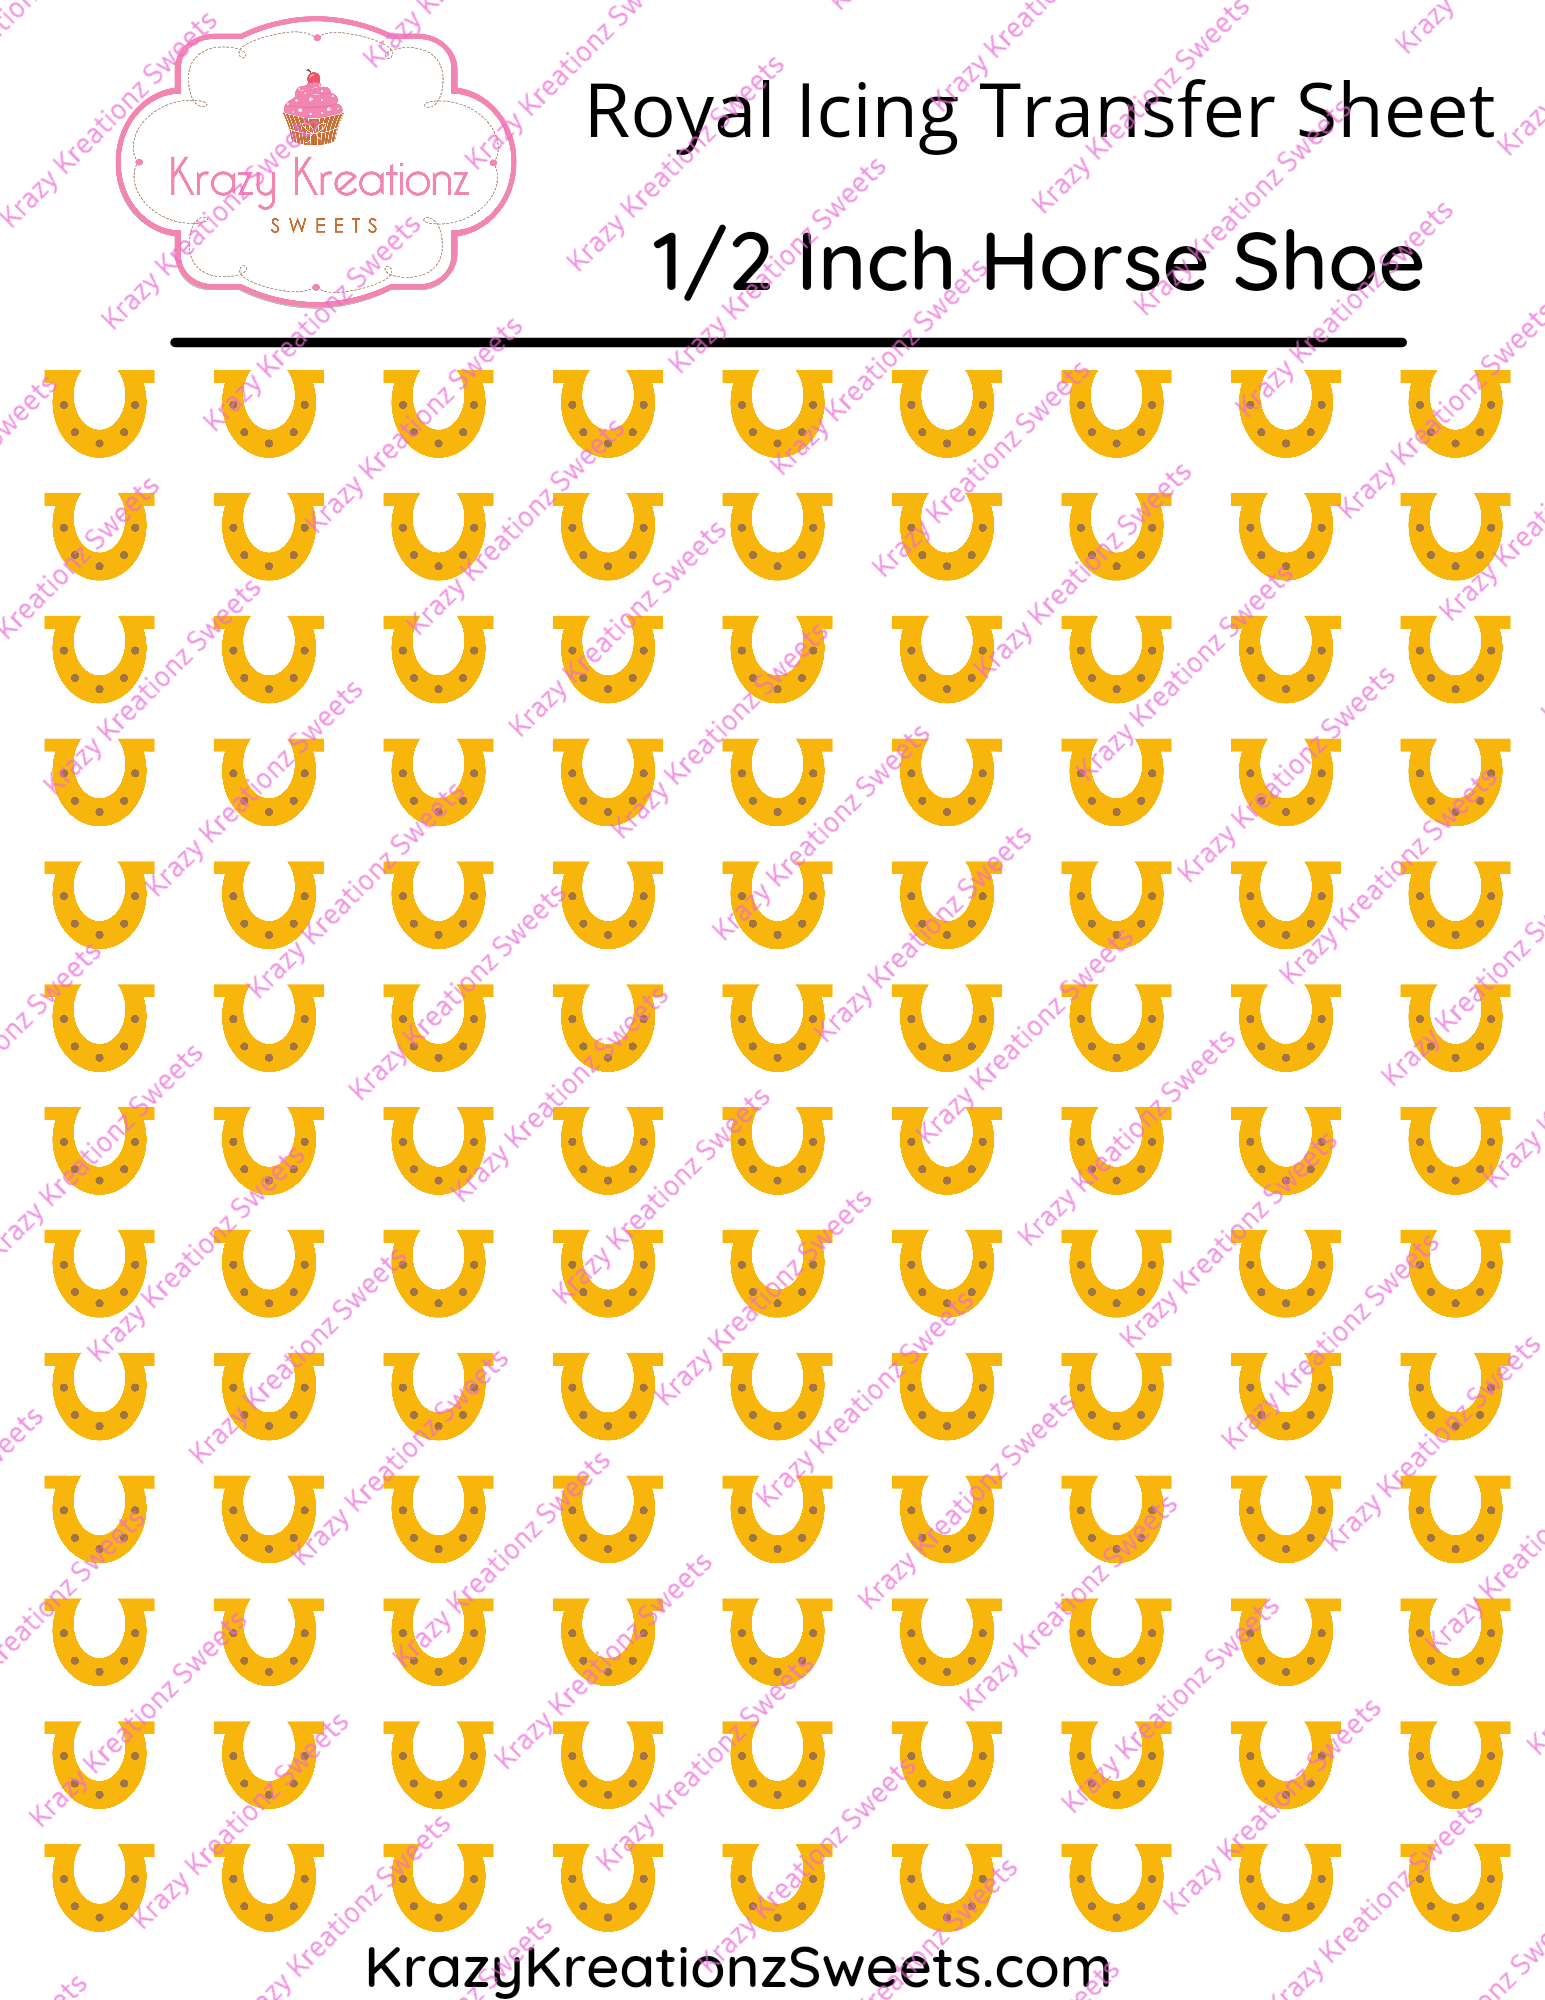 1/2 inch Horse Shoe Royal Icing Transfer Sheet